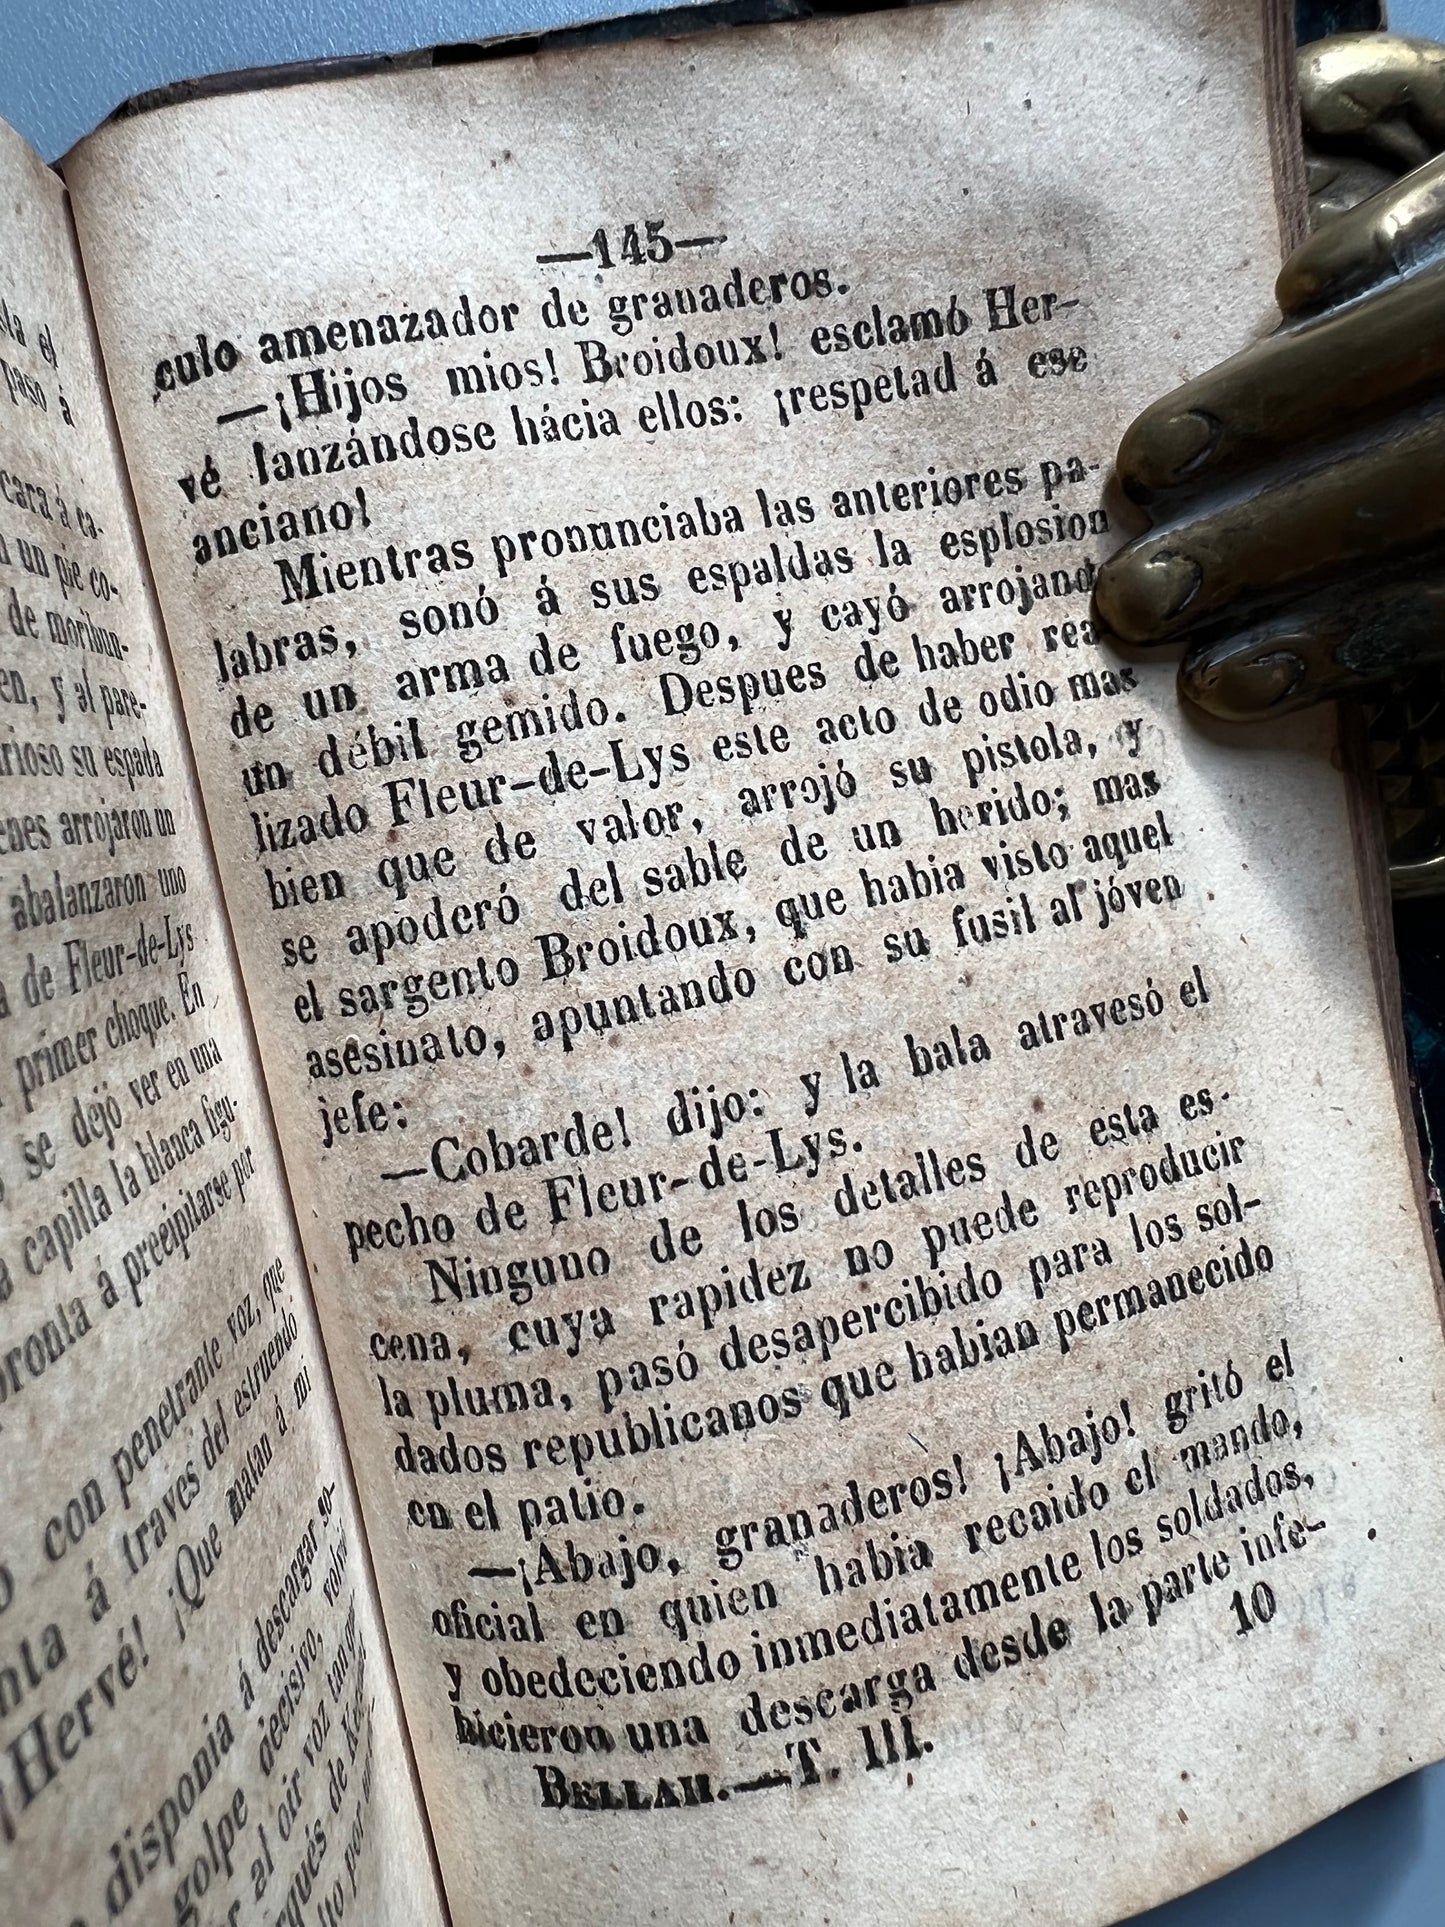 Bellah, M. Octavio Feuillet - Imprenta de D. josé Maria Atienza, 1851